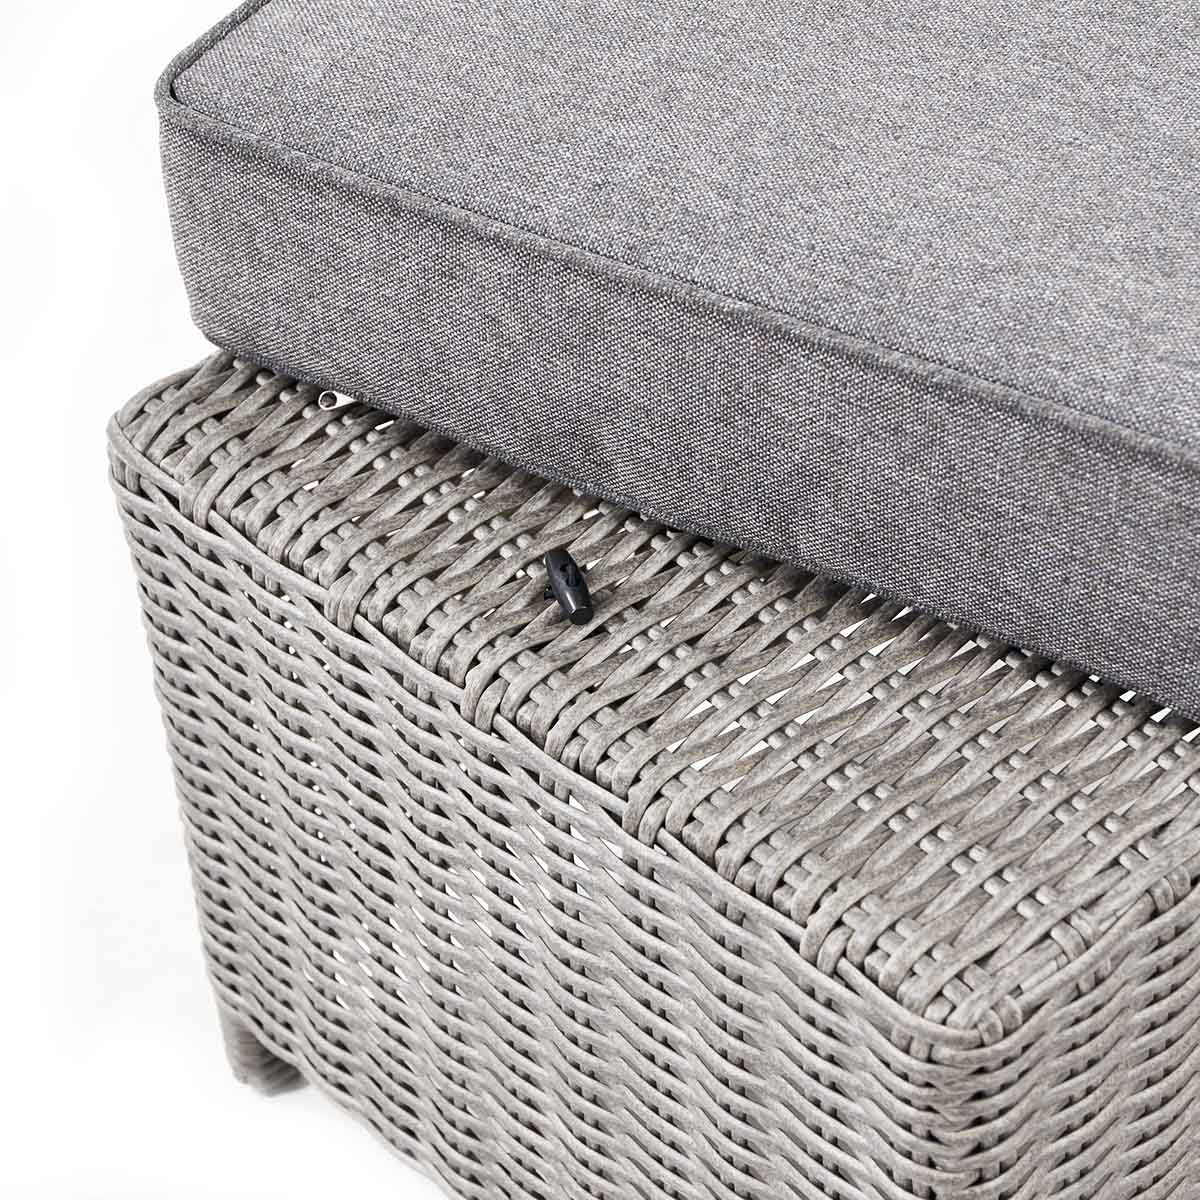 Borneo Grey Rattan Effect Garden Corner Sofa Set with Ceramic Top Table – Click Style